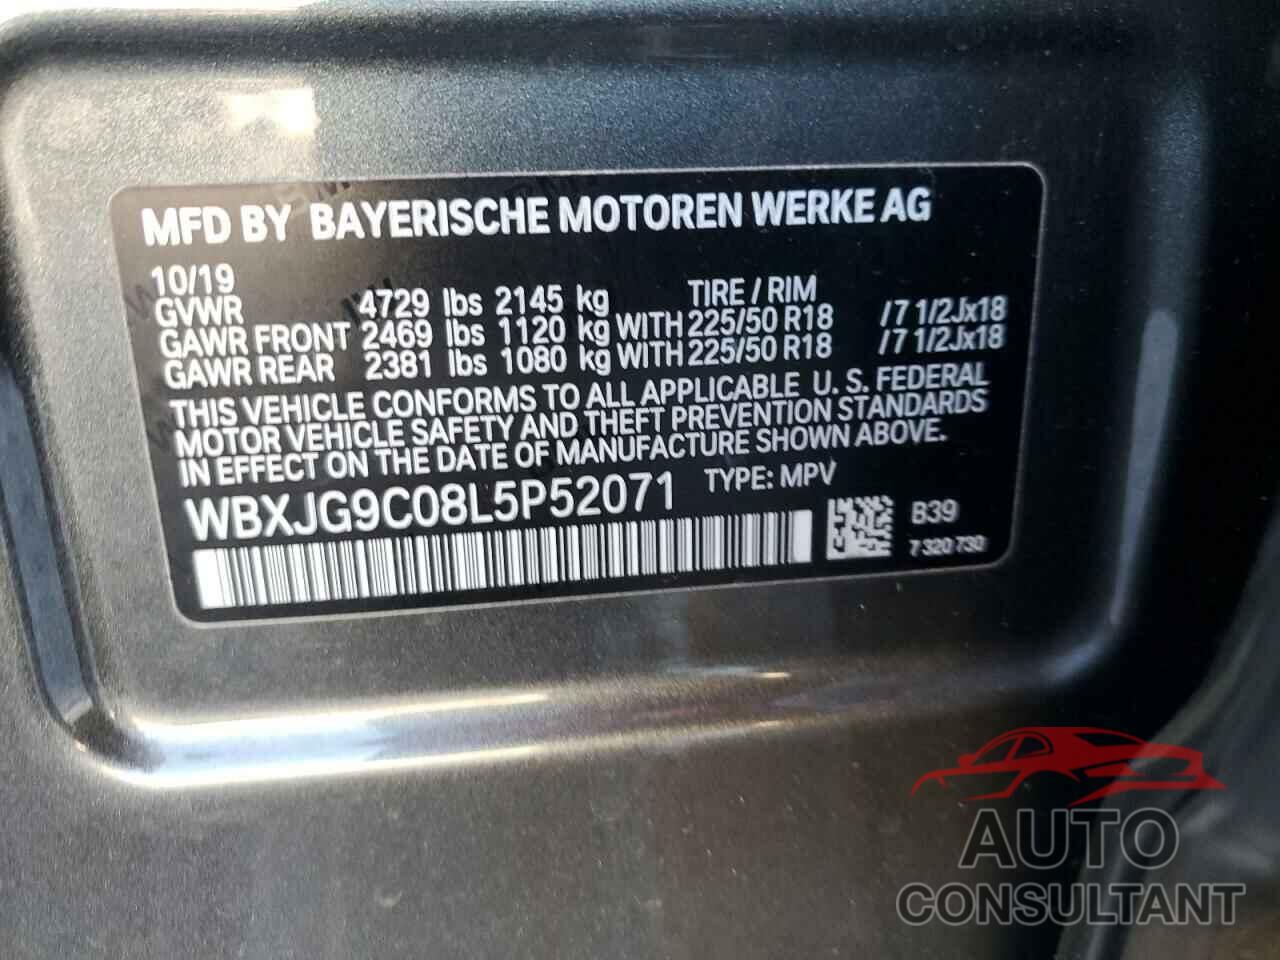 BMW X1 2020 - WBXJG9C08L5P52071